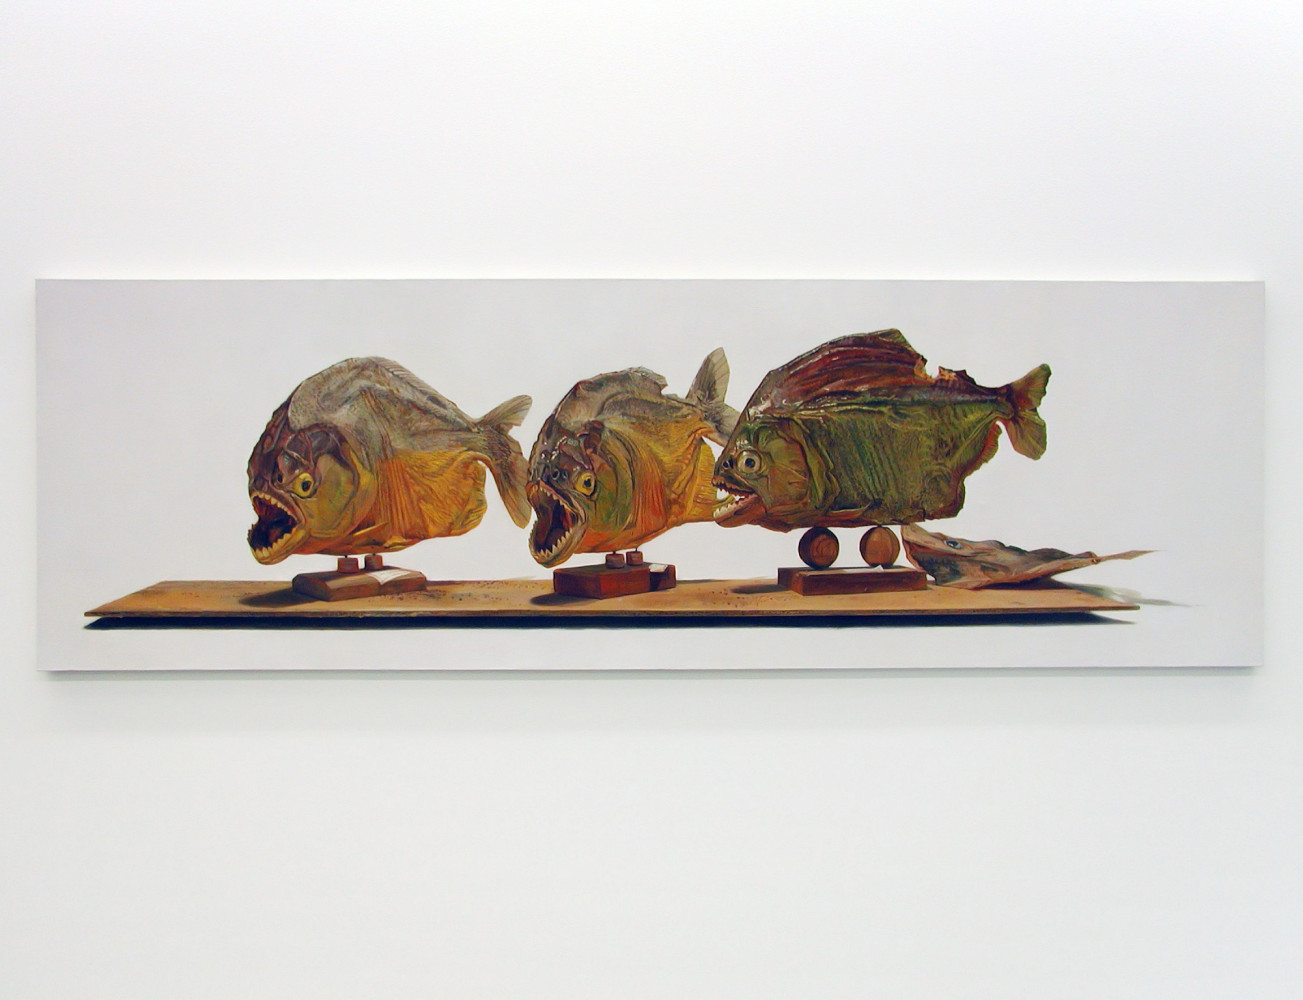 ‘Jim Butler, Bad Fish’, 2001